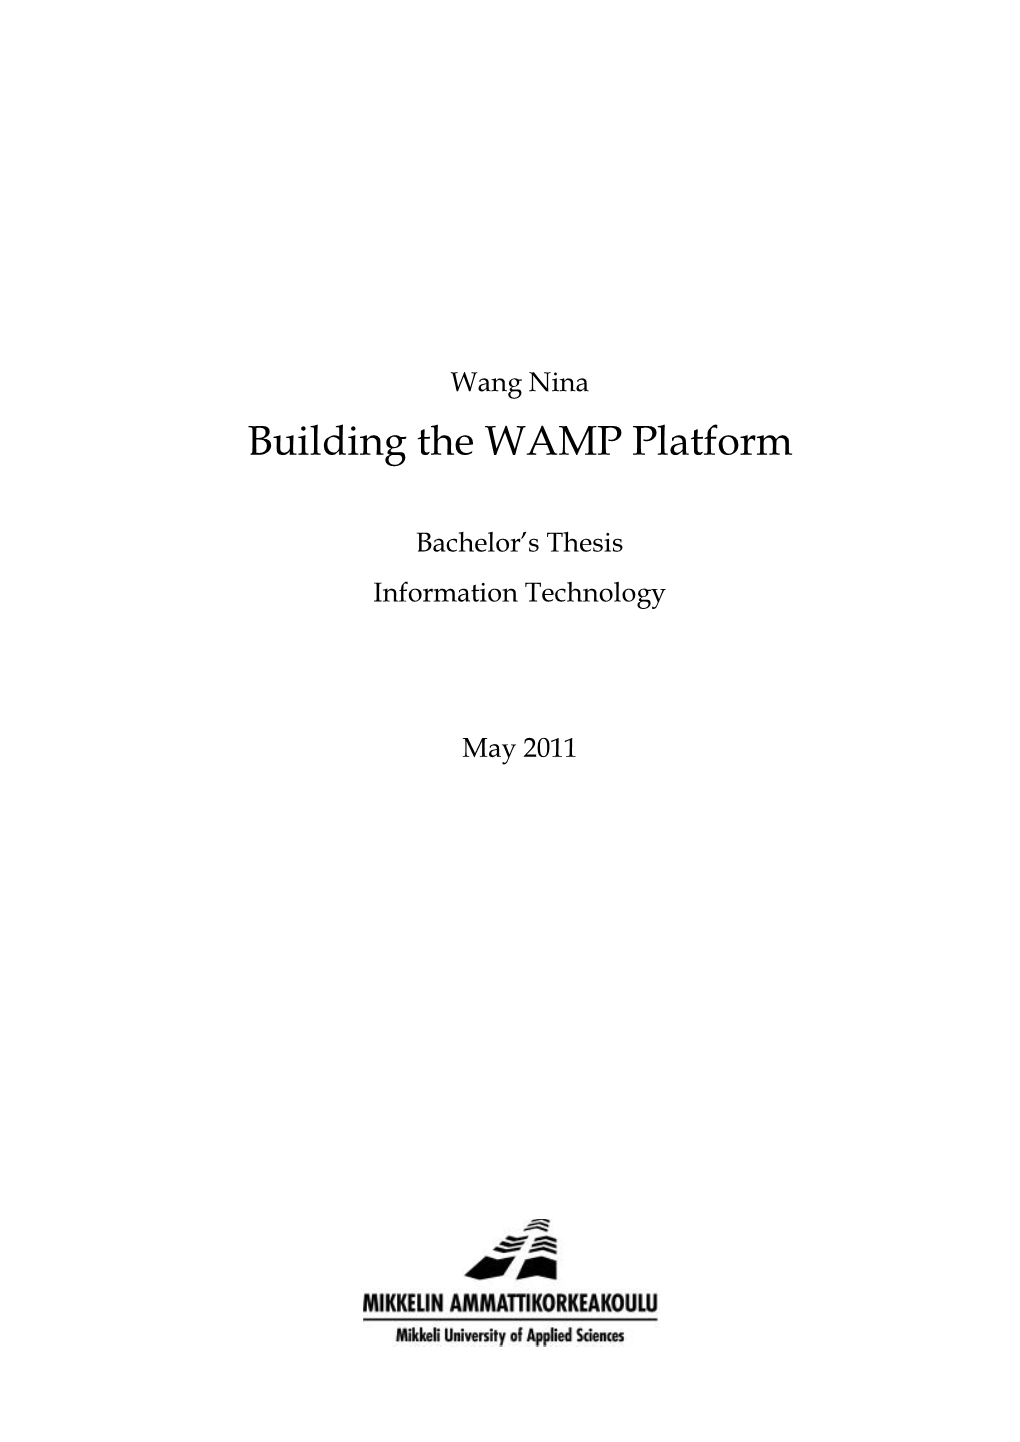 Building the WAMP Platform